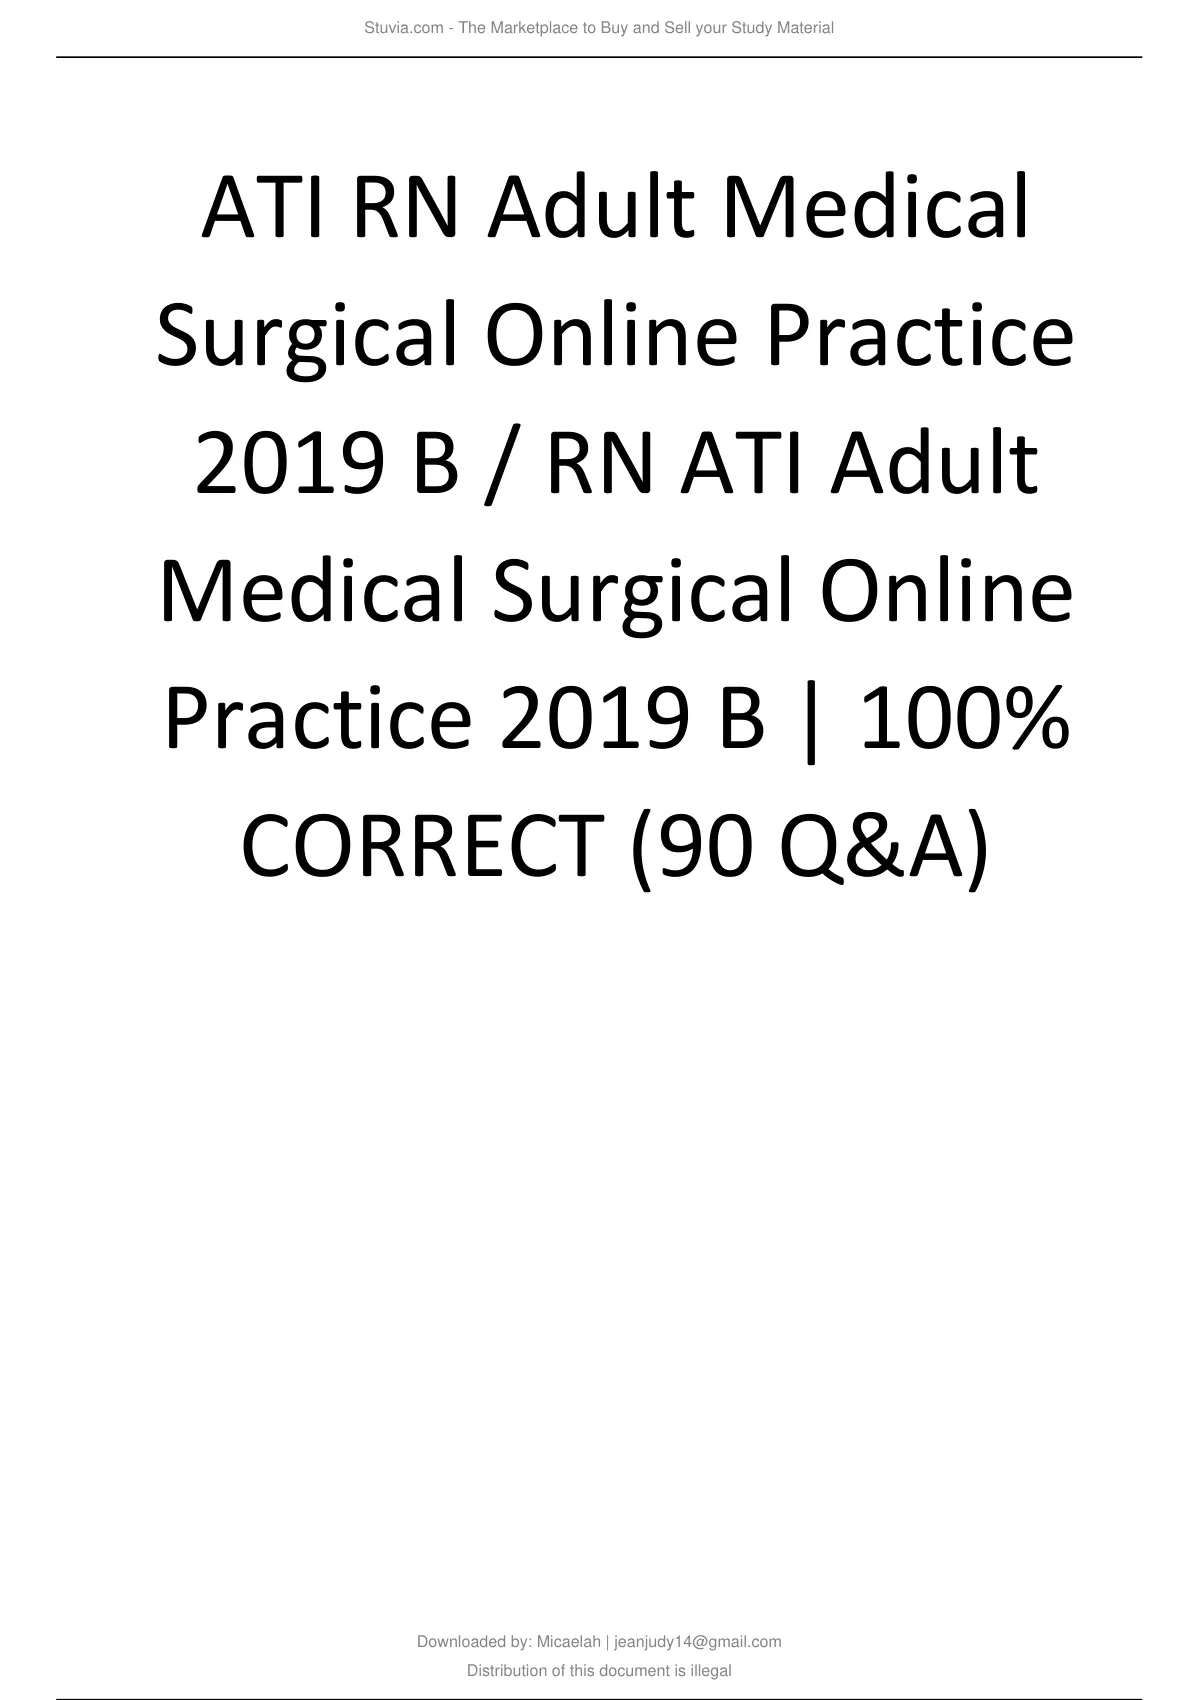 ATI RN Adult Medical Surgical Online Practice 2019 B RN ATI Exam